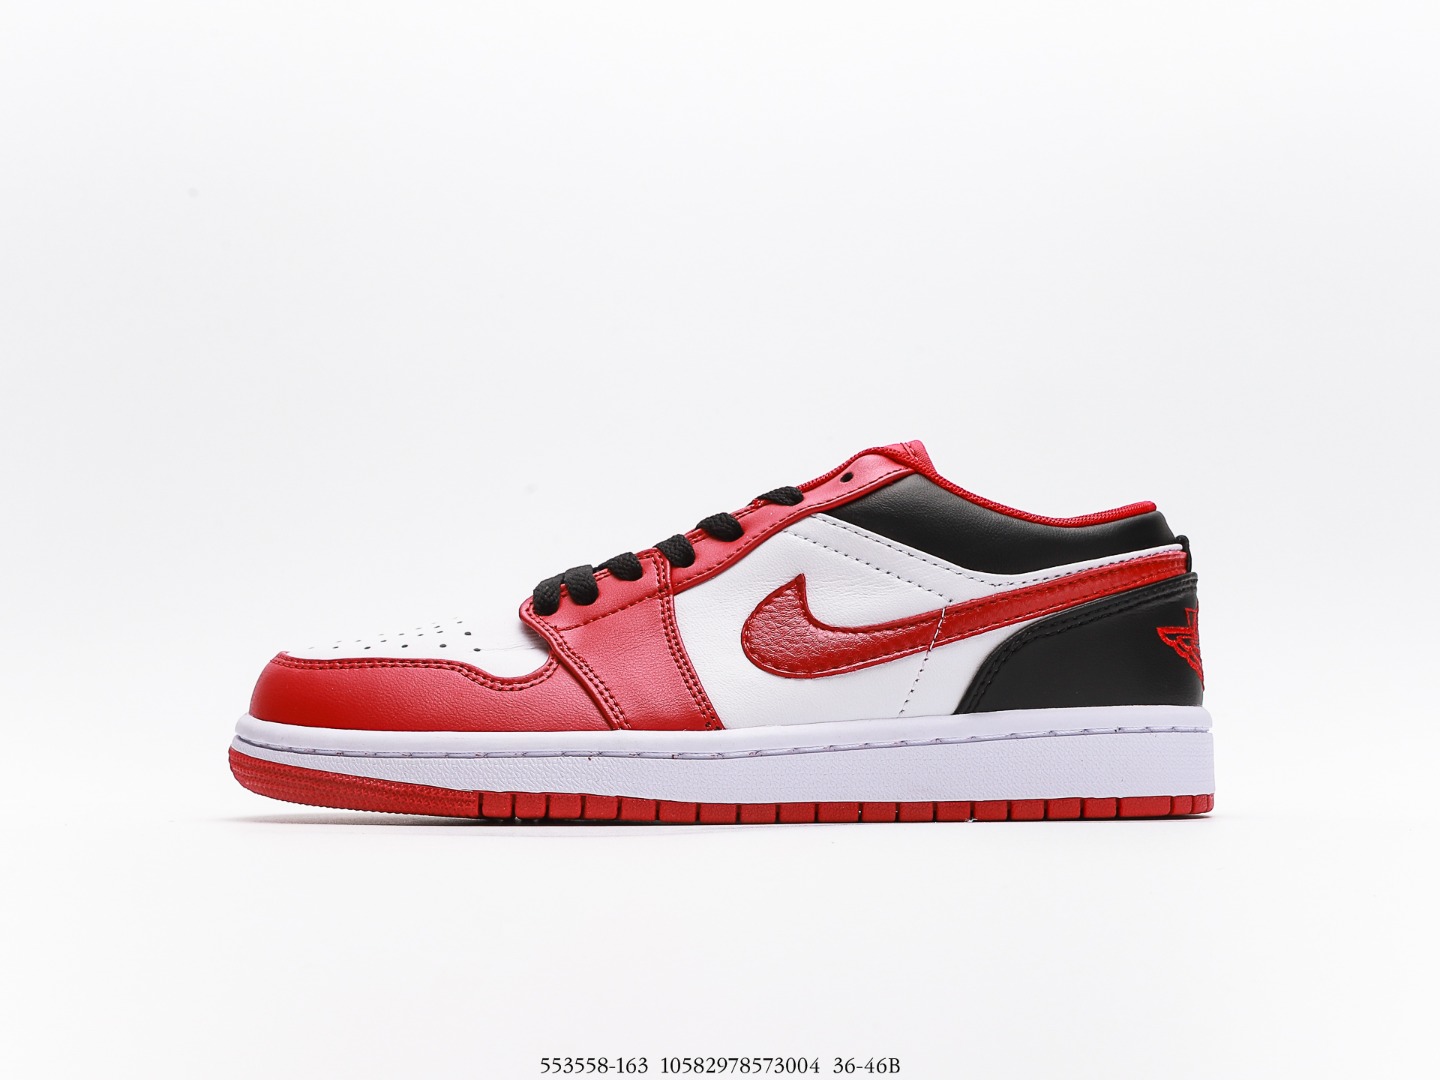 Nike Air Jordan 1 basso livello 